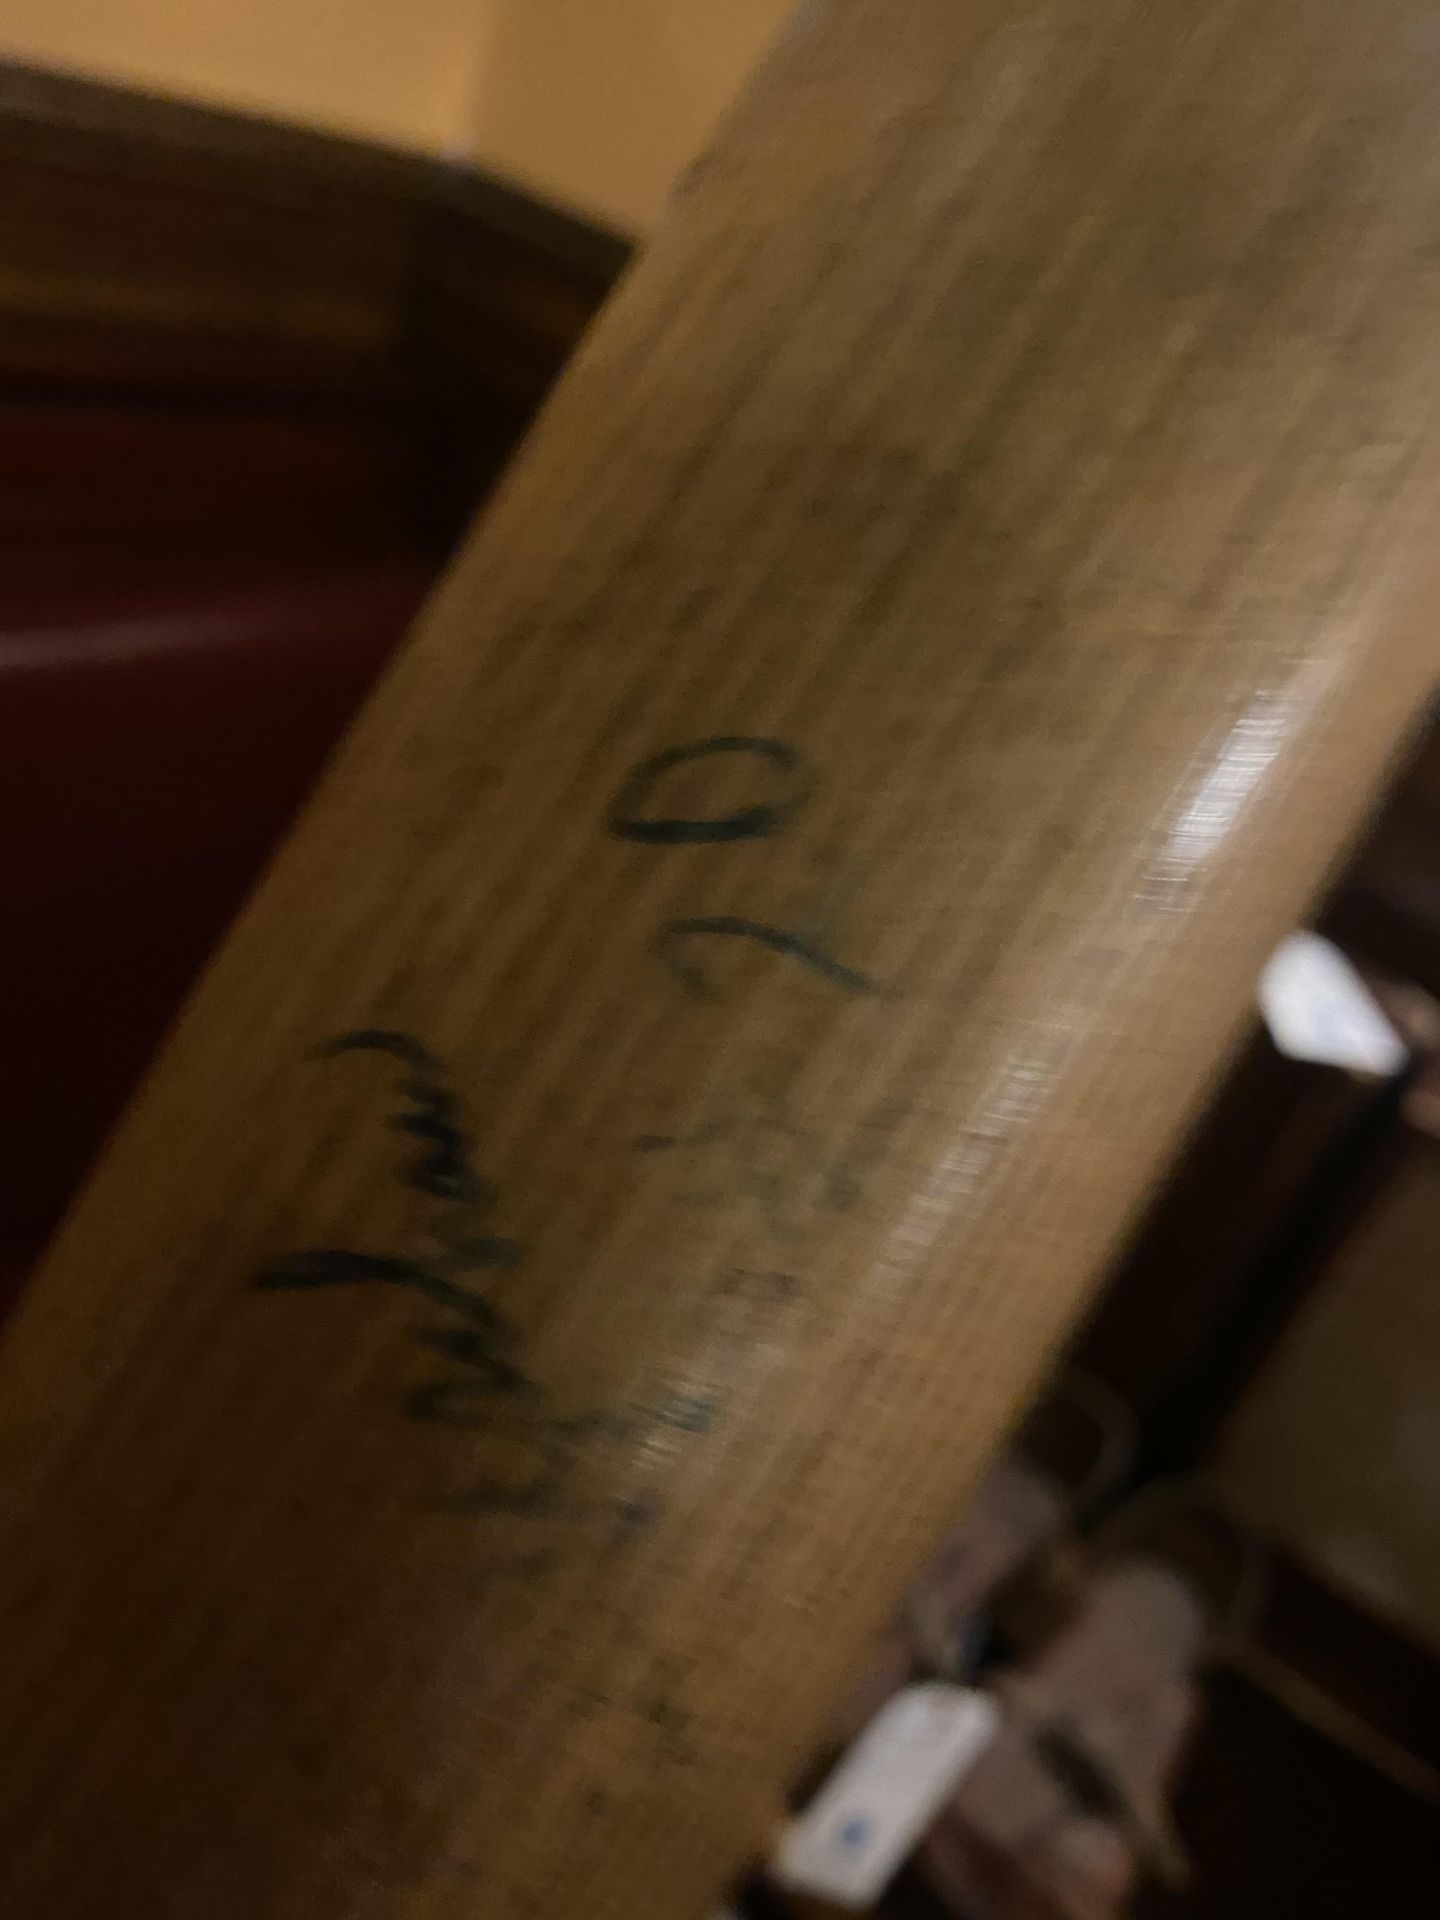 Willy Upshaw Signed Bat - Image 2 of 2